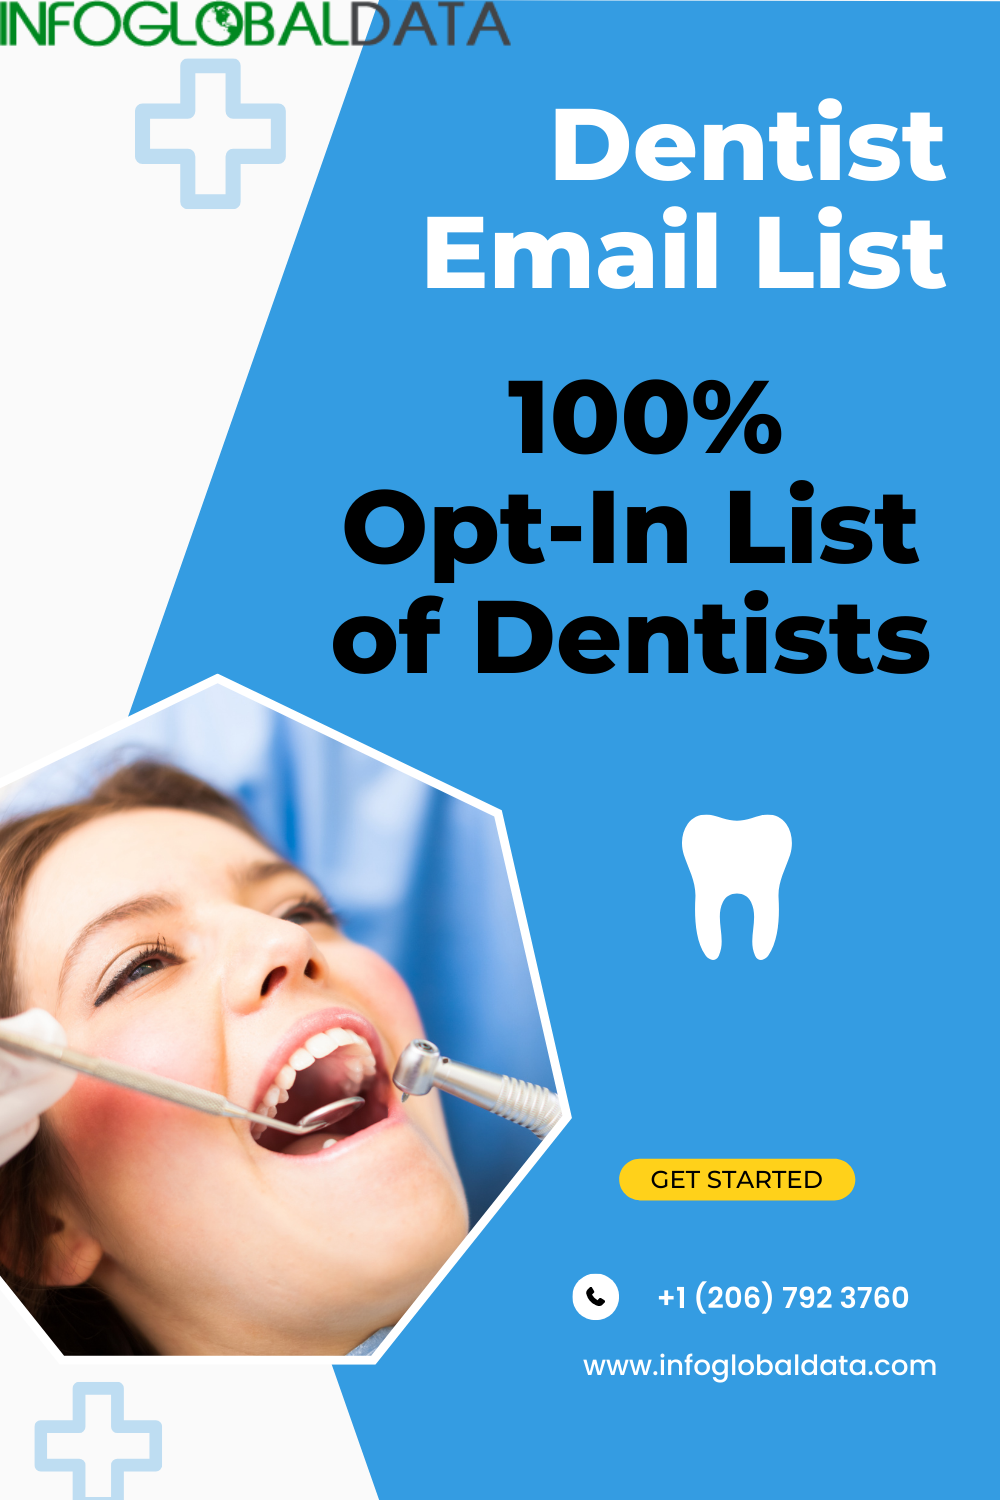 Dentist Email List